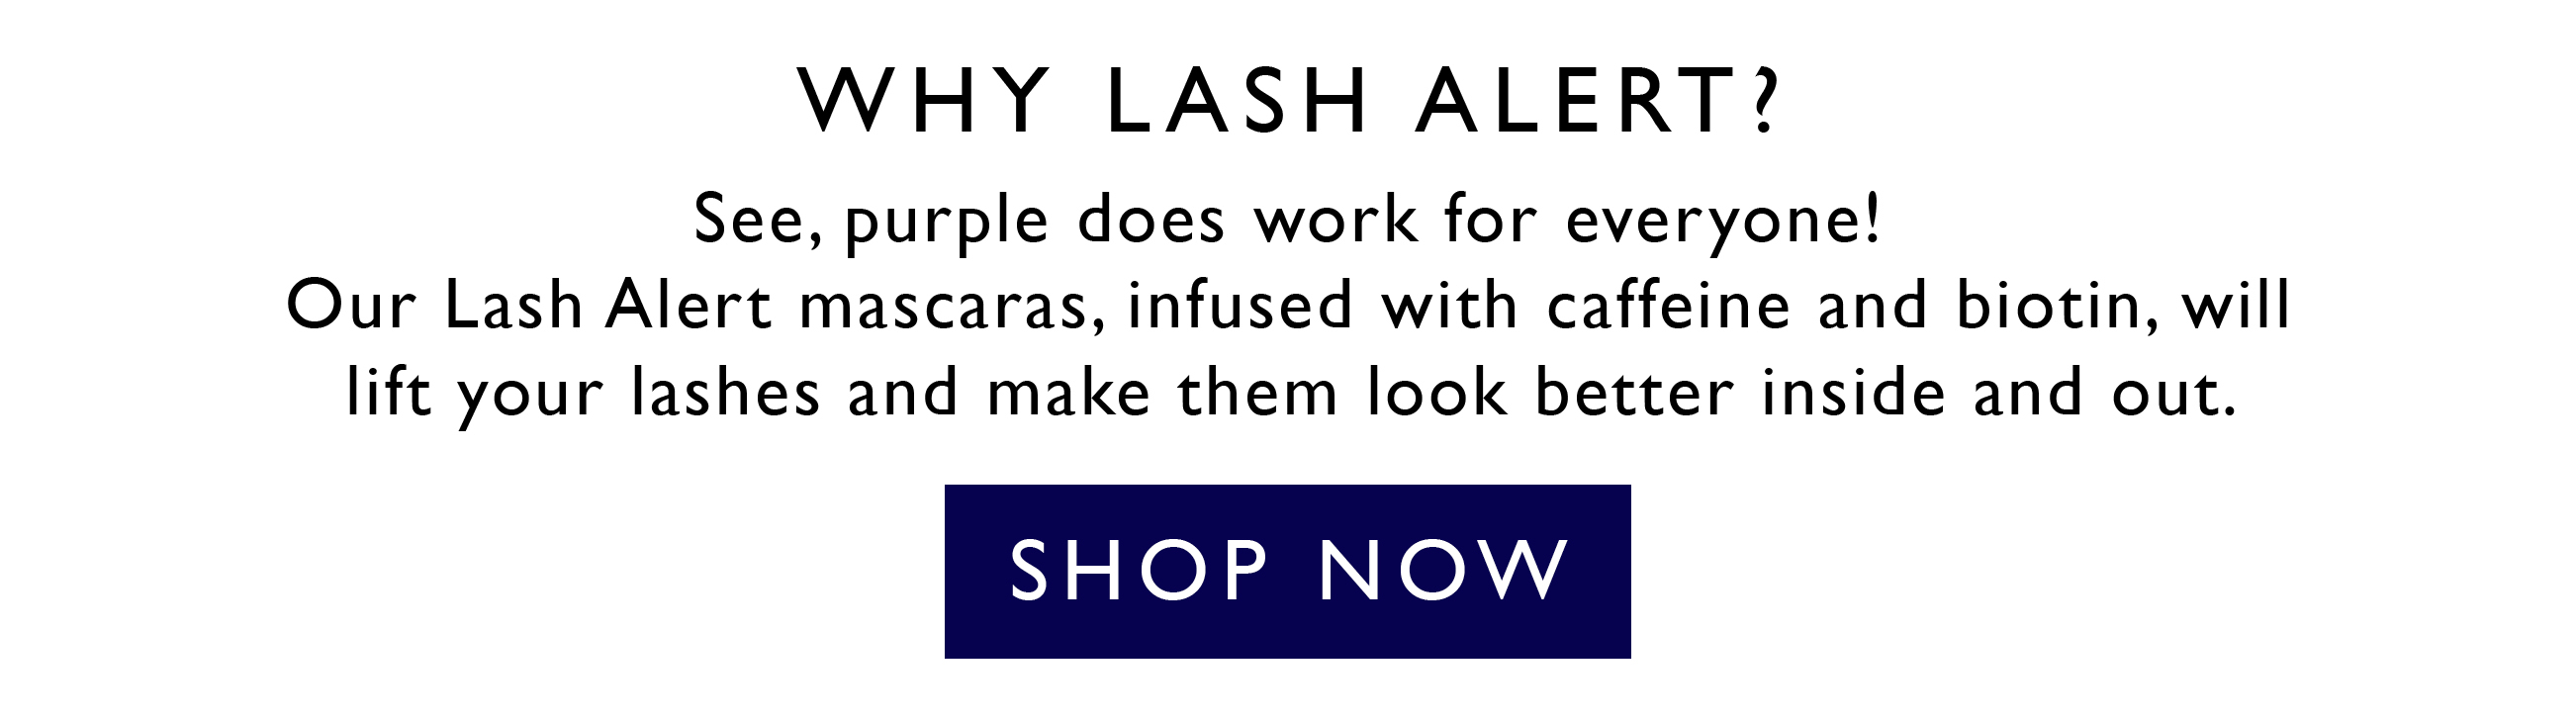 Why lash alert